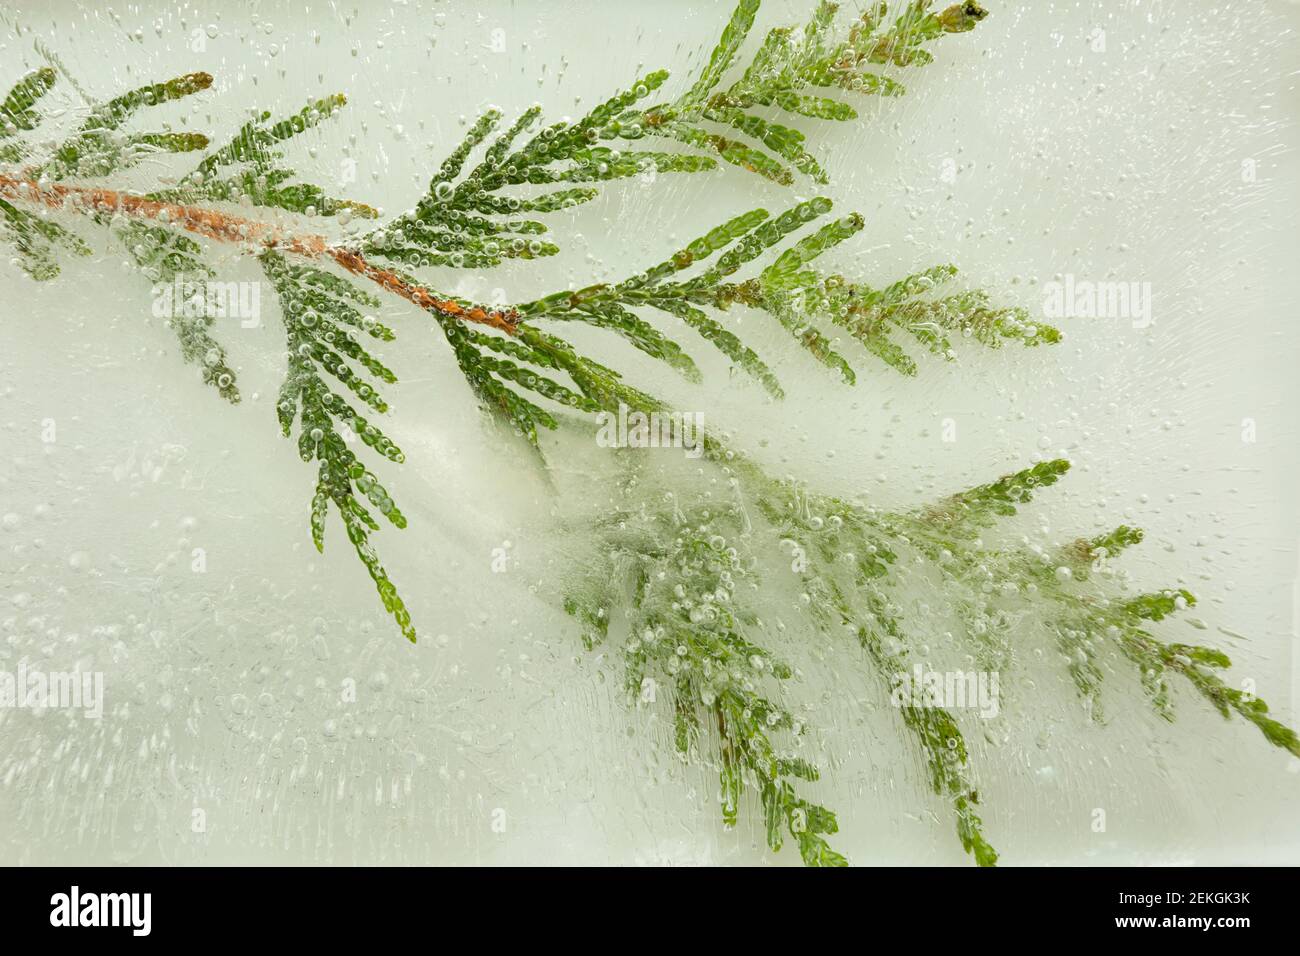 WA19289-00...WASHINGTON - A twig that blew off a Western Red Cedar tree frozen in ice. Stock Photo